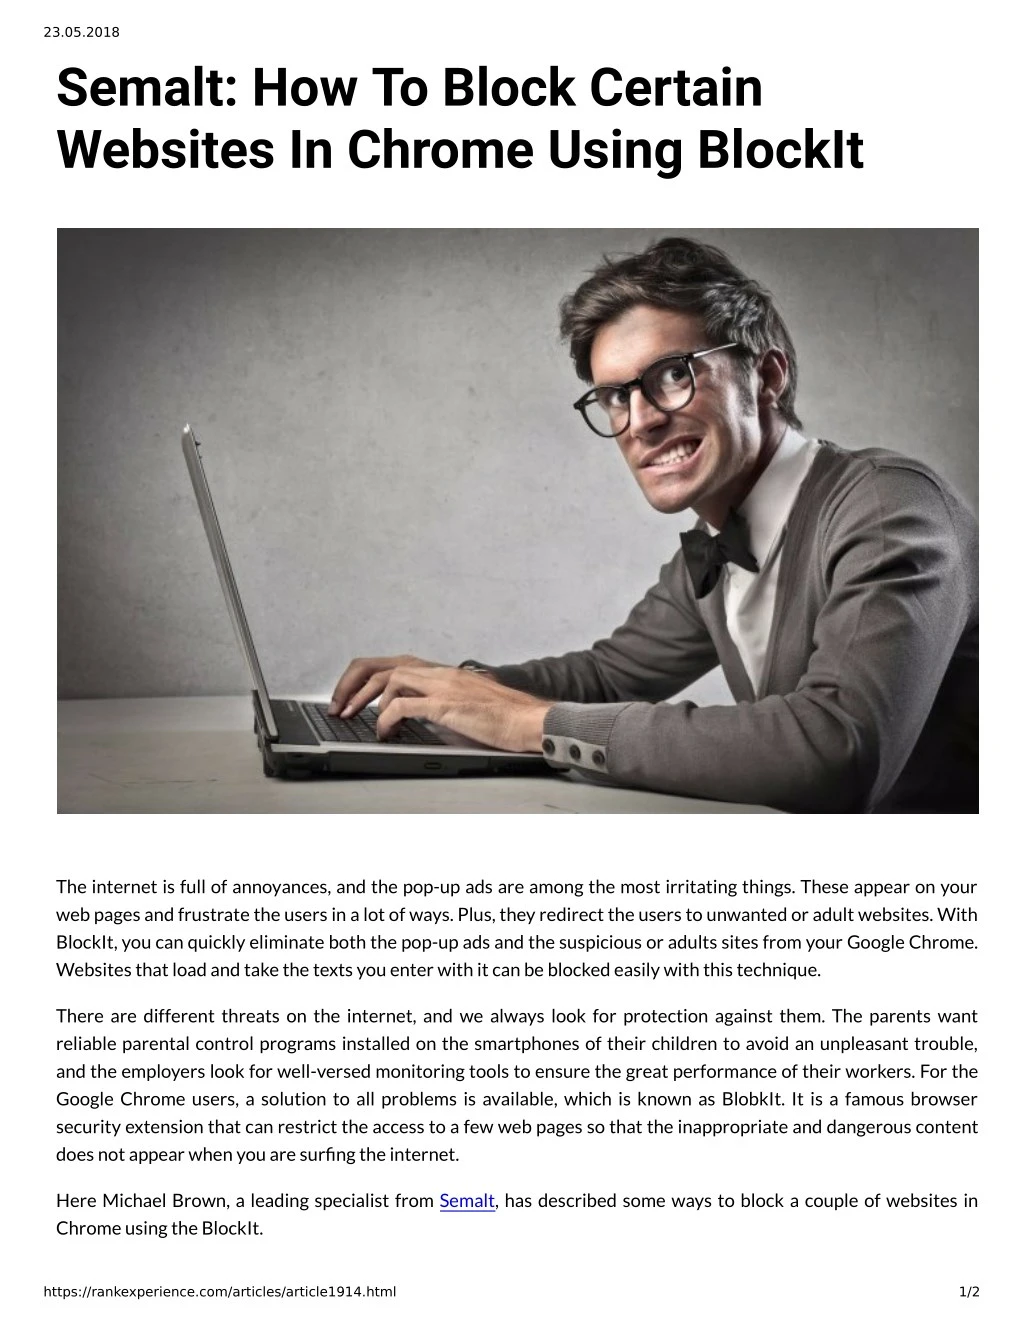 23 05 2018 semalt how to block certain websites